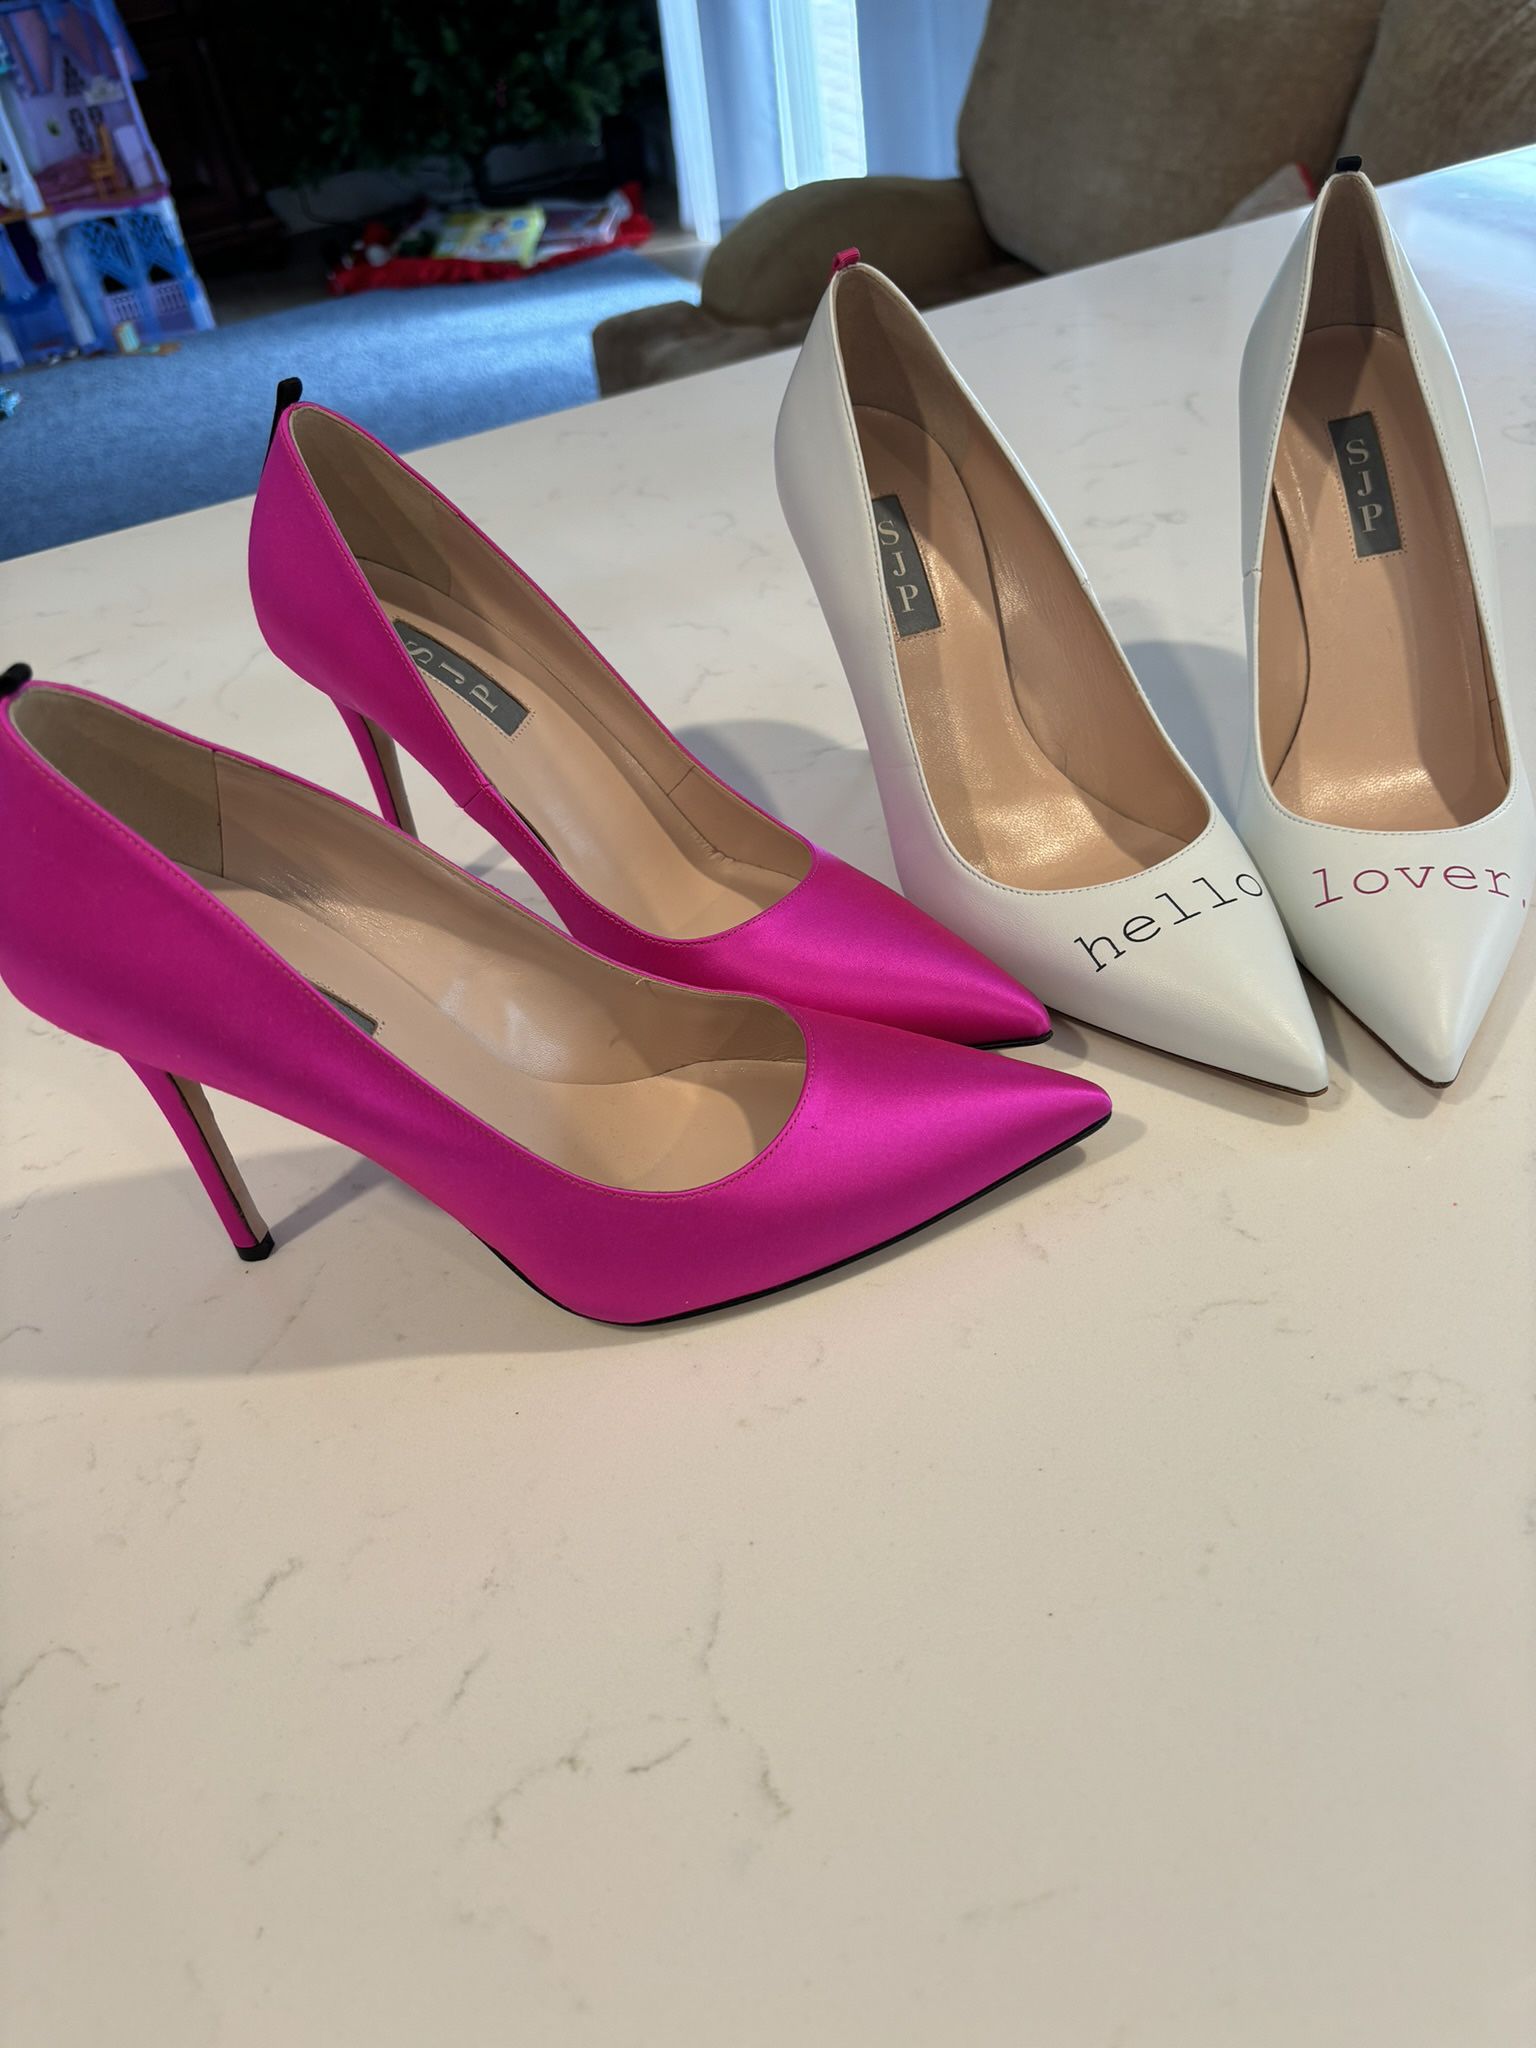 Sarah Jessica Parker Shoes, Heels, Pink Or Cream